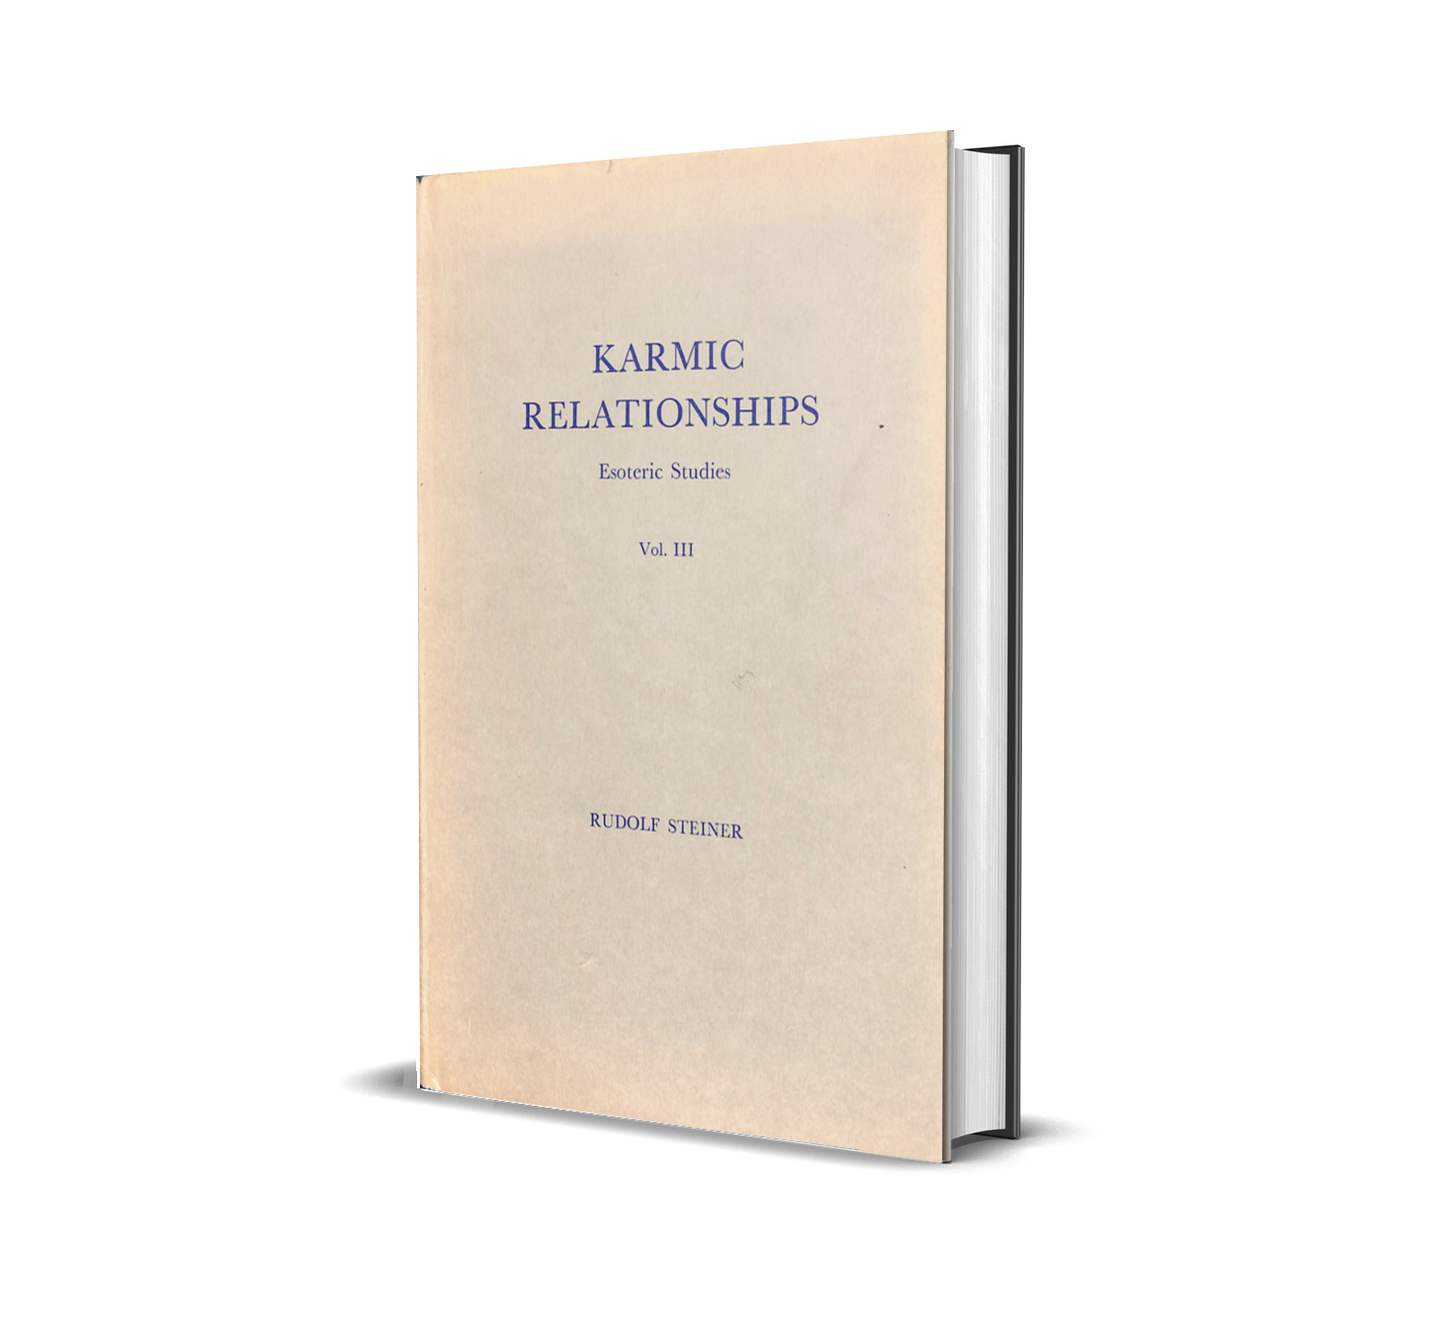 Karmic Relationships Vol. III, 2nd edition reprint